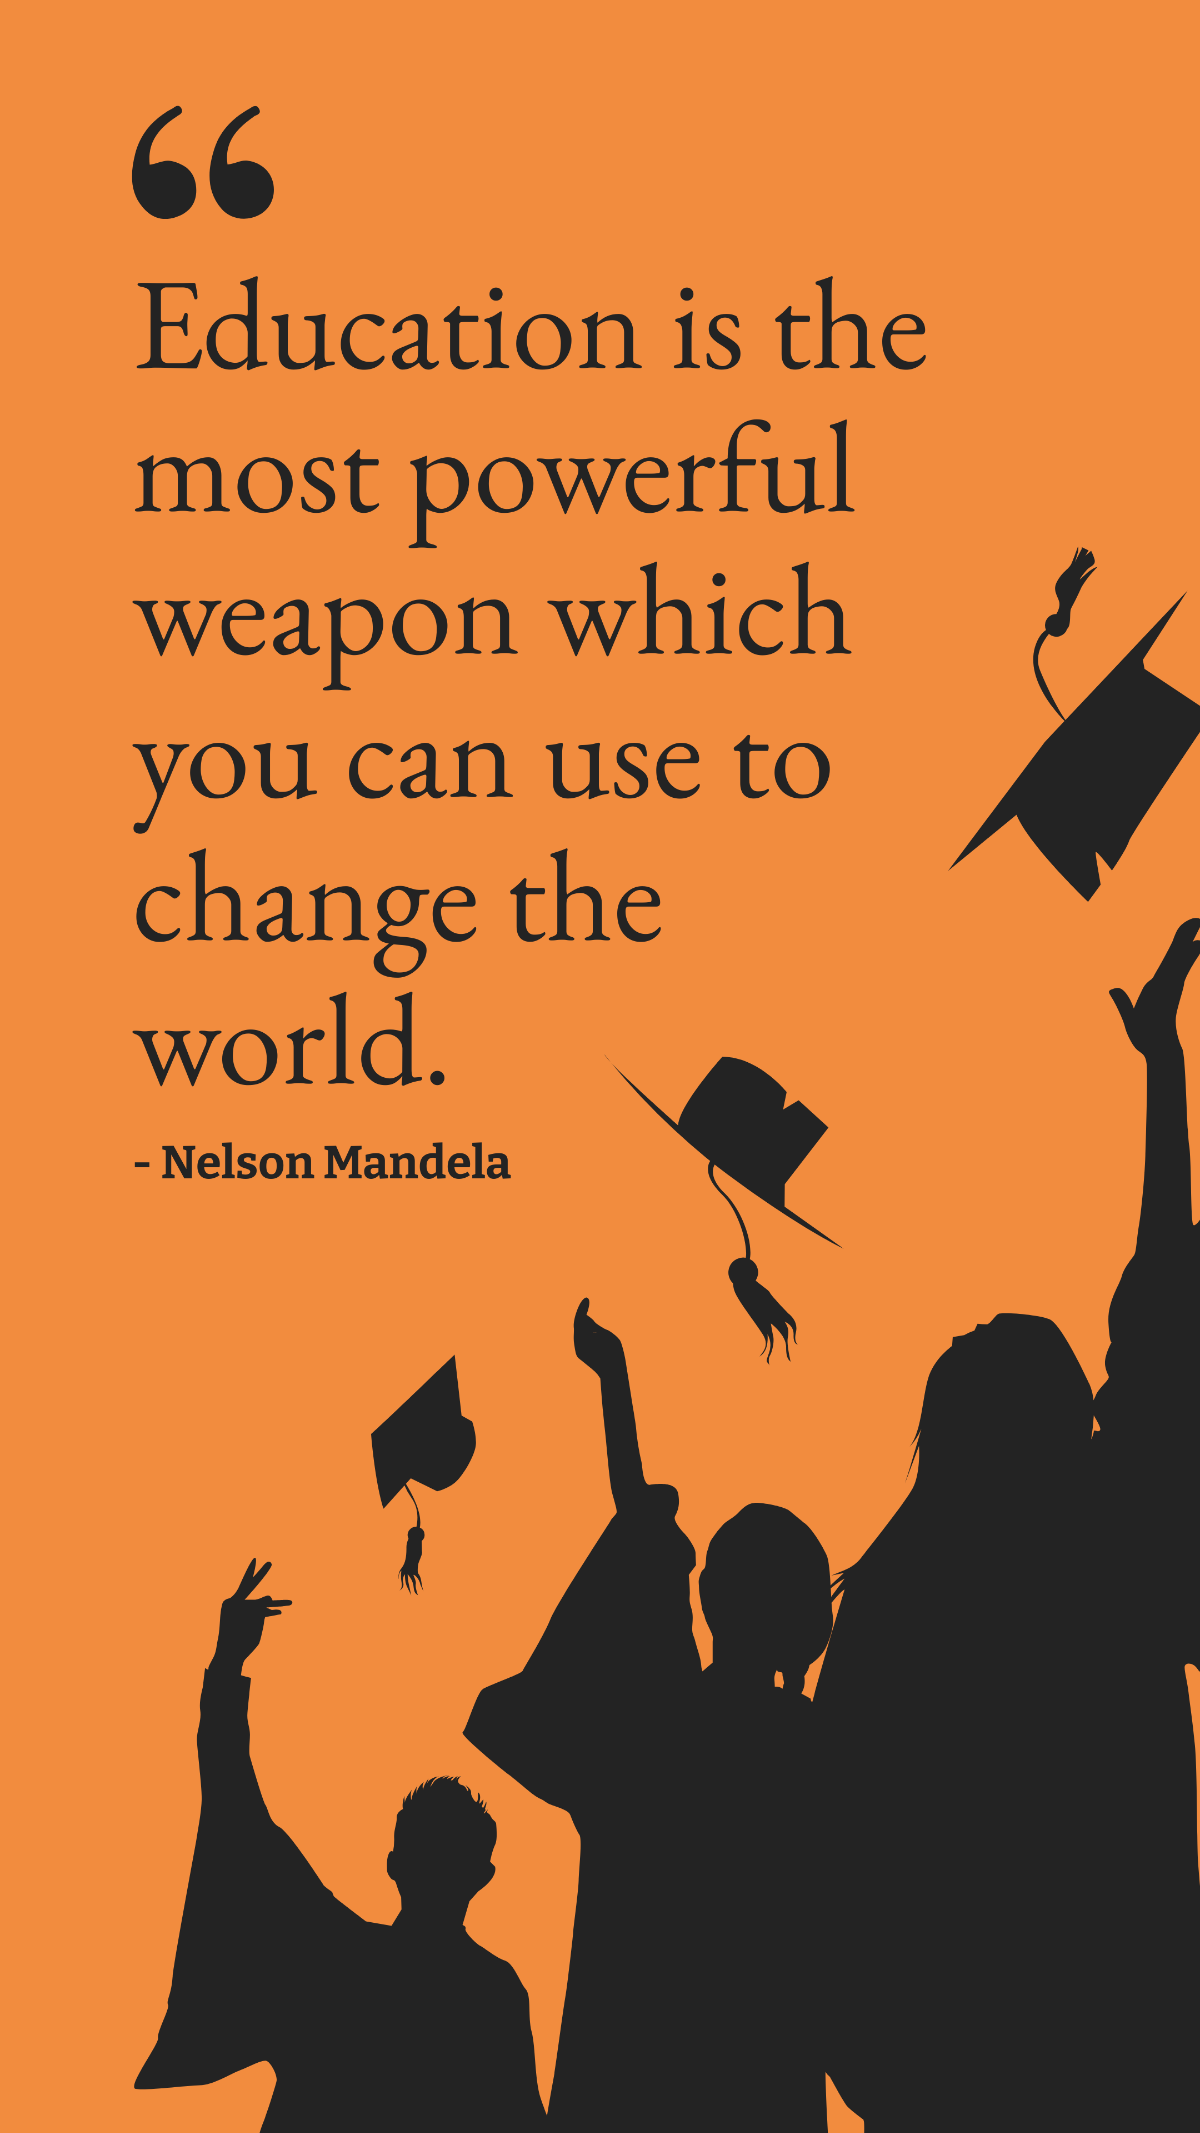 Nelson Mandela Quote on Education